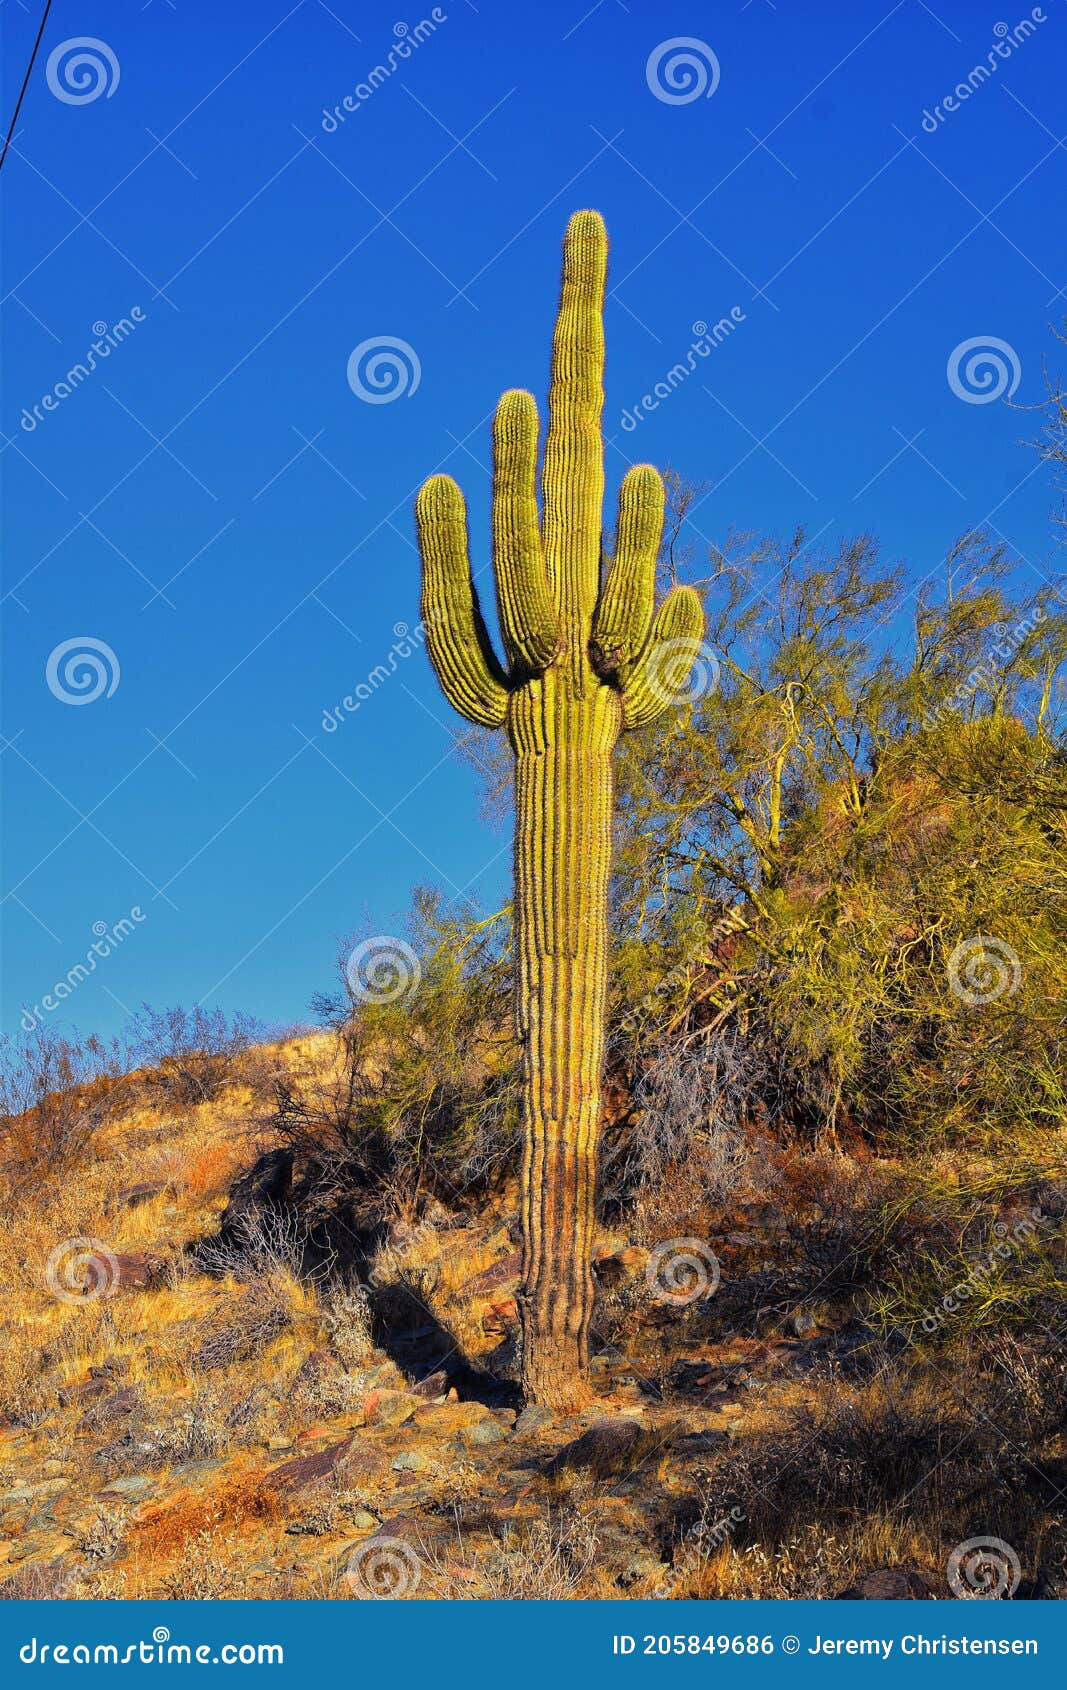 https://thumbs.dreamstime.com/z/cactus-saguaro-carnegiea-gigantea-closeup-en-invierno-el-parque-de-monta%C3%B1a-sur-y-preservar-sendero-ca%C3%B1%C3%B3n-pima-phoenix-arizona-205849686.jpg